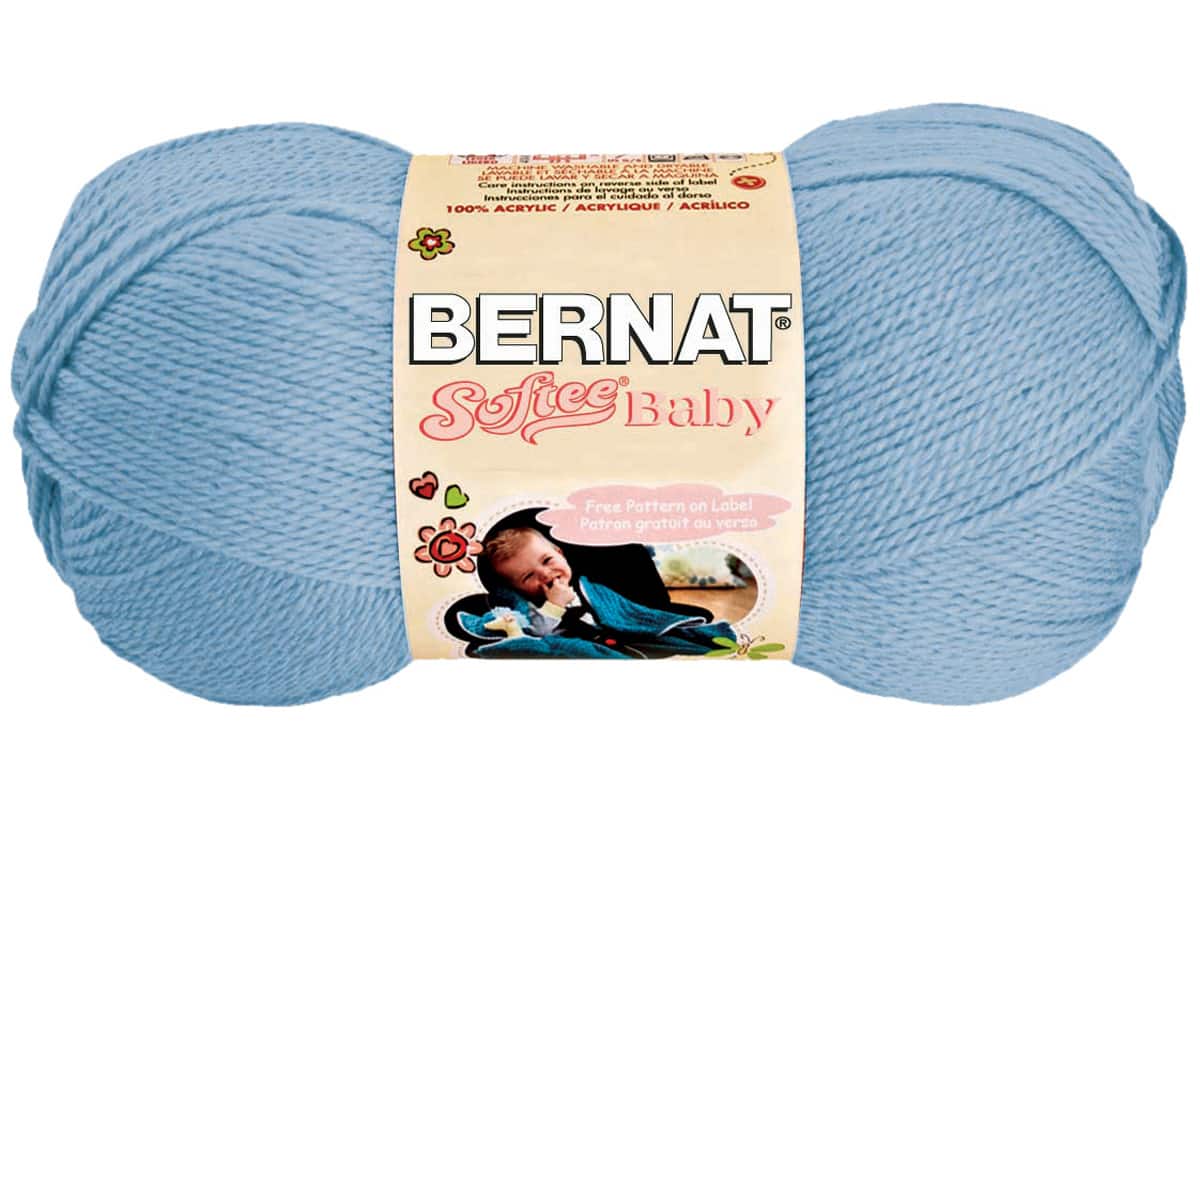 Bernat Yarn Maker Home Dec